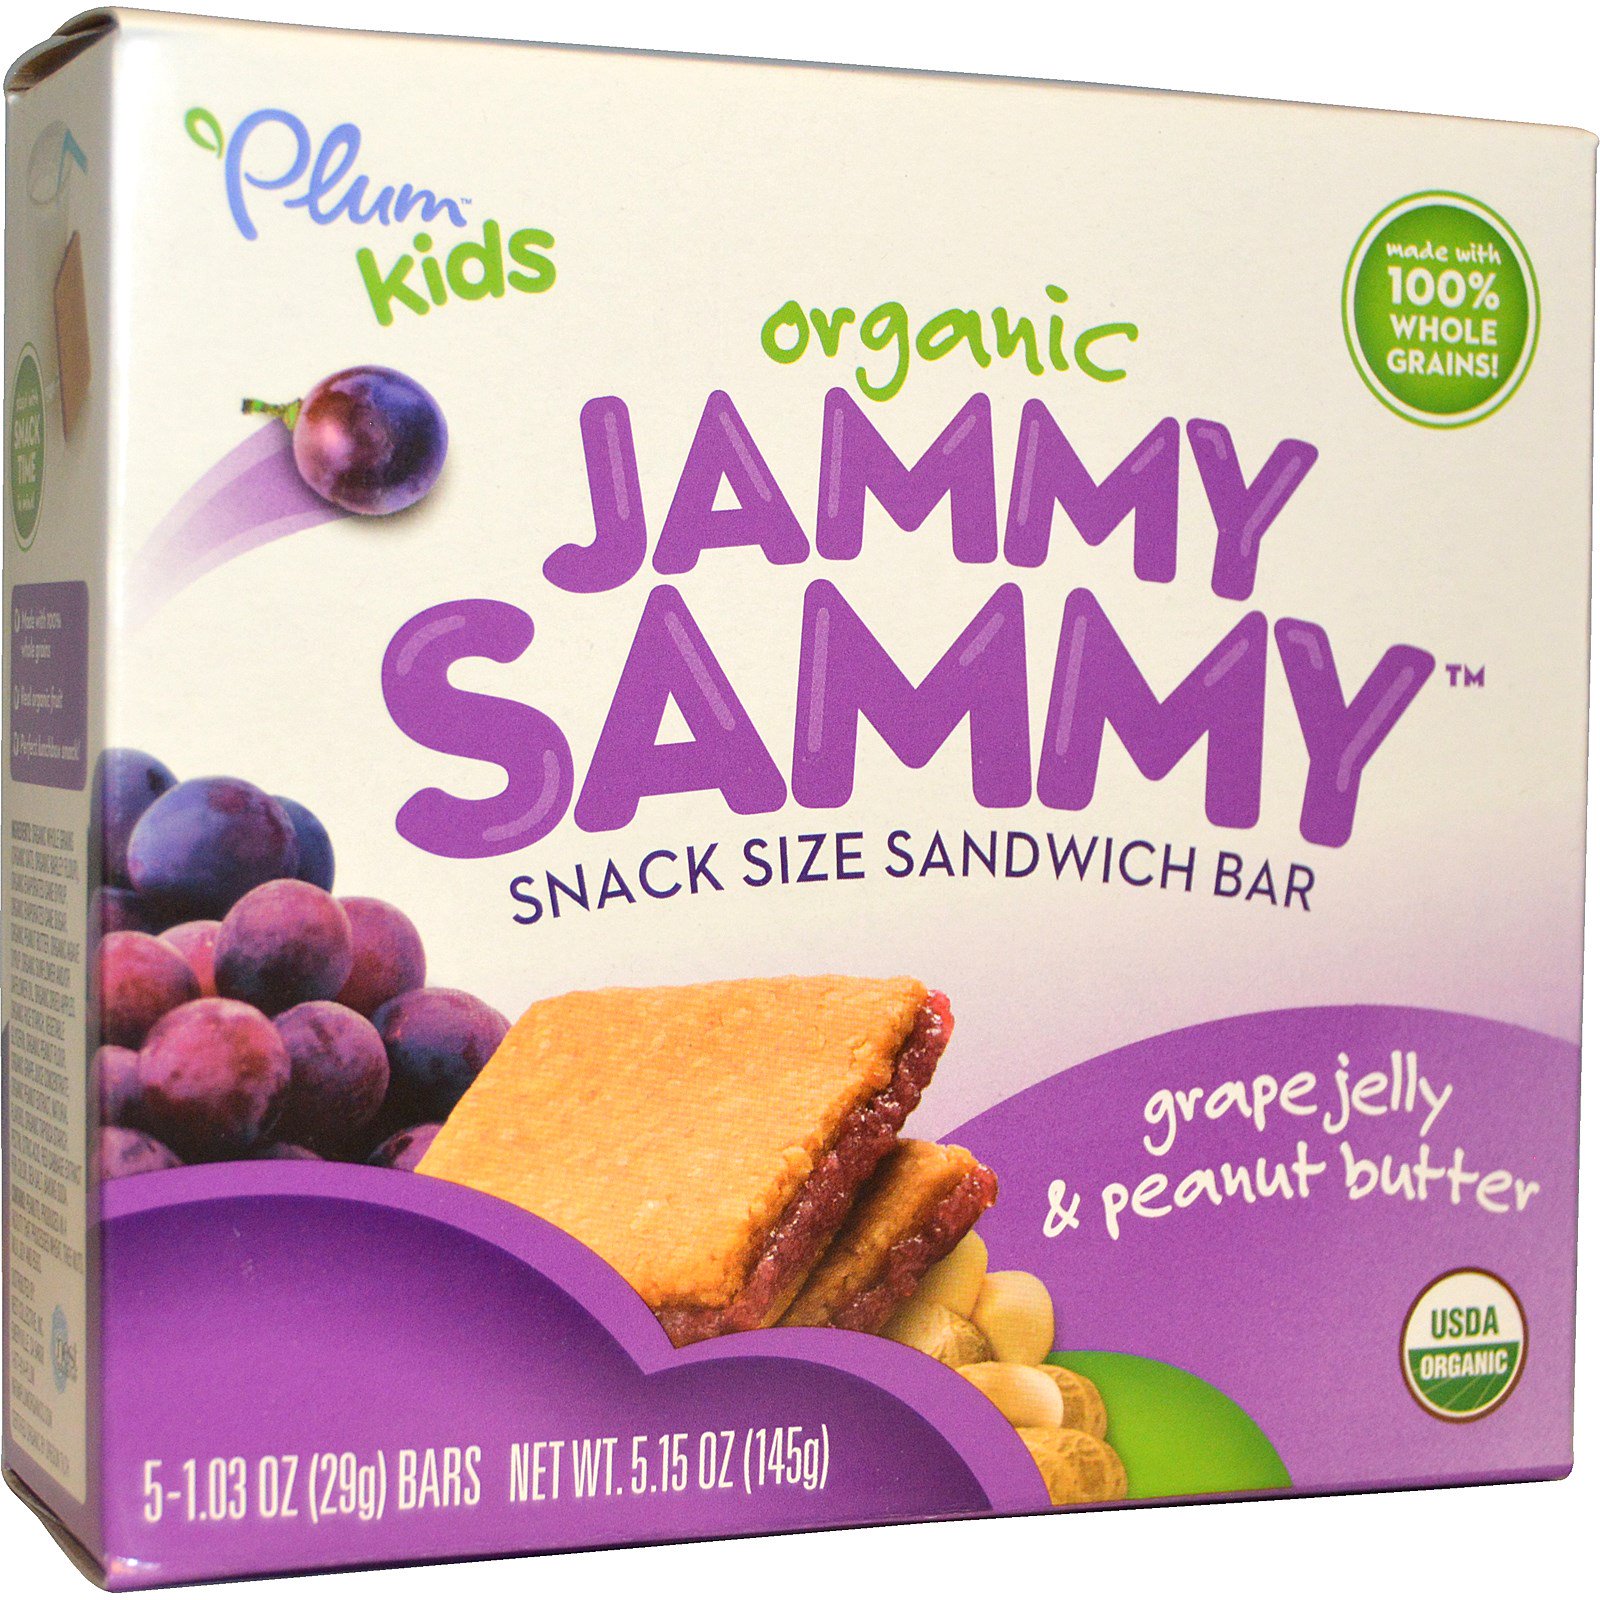 plum organics, kids, organic jammy sammy, grape jelly & peanut